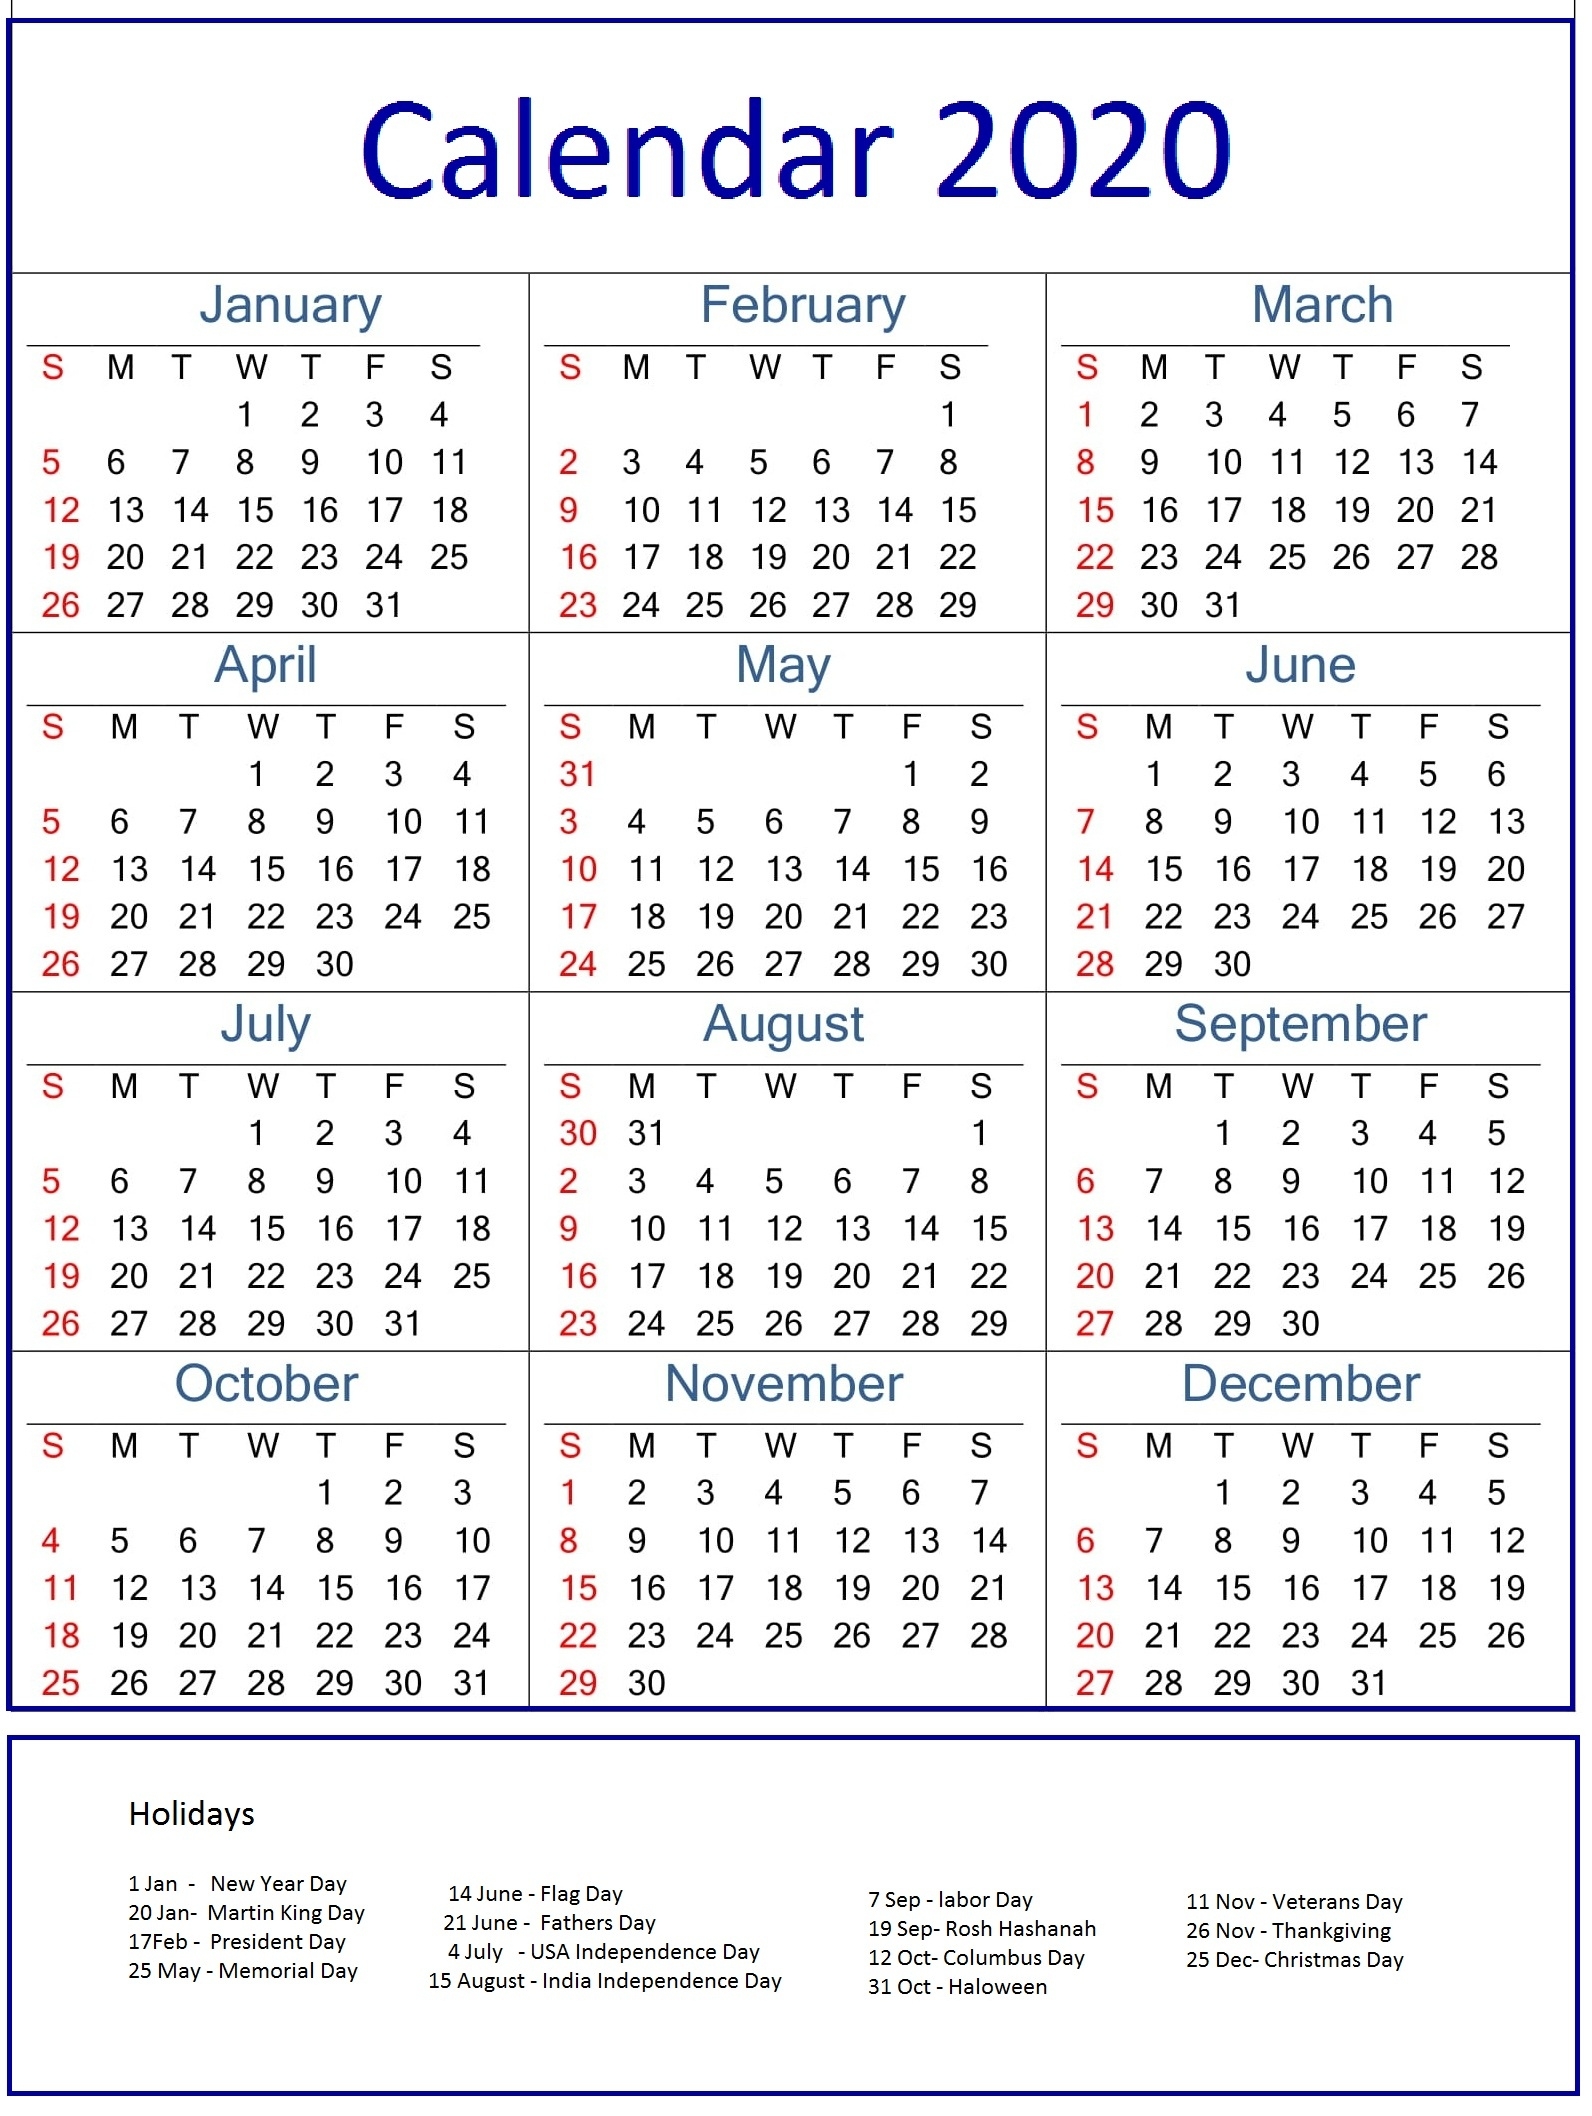 Monthly Calendar Holidays 2020 | Calendar Ideas Design Creative 2020 Calendar With Holidays Printable